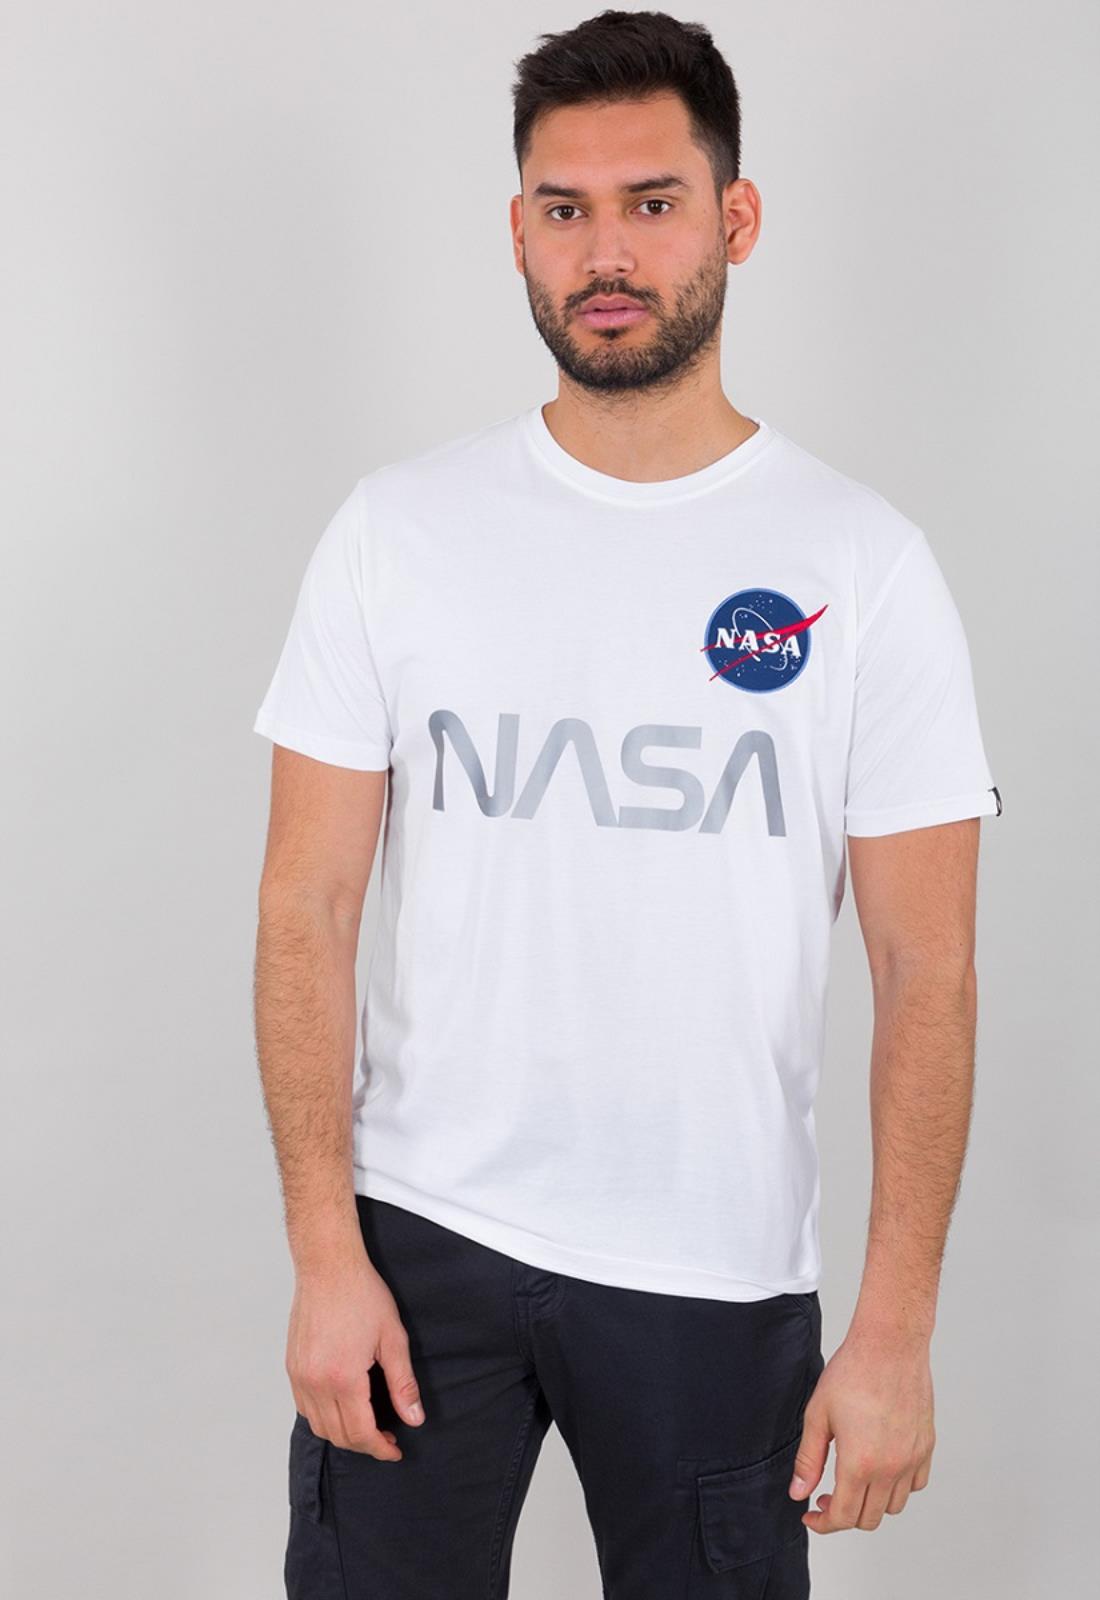 NASA T Industries Snotshop – T-shirt Reflective Alpha